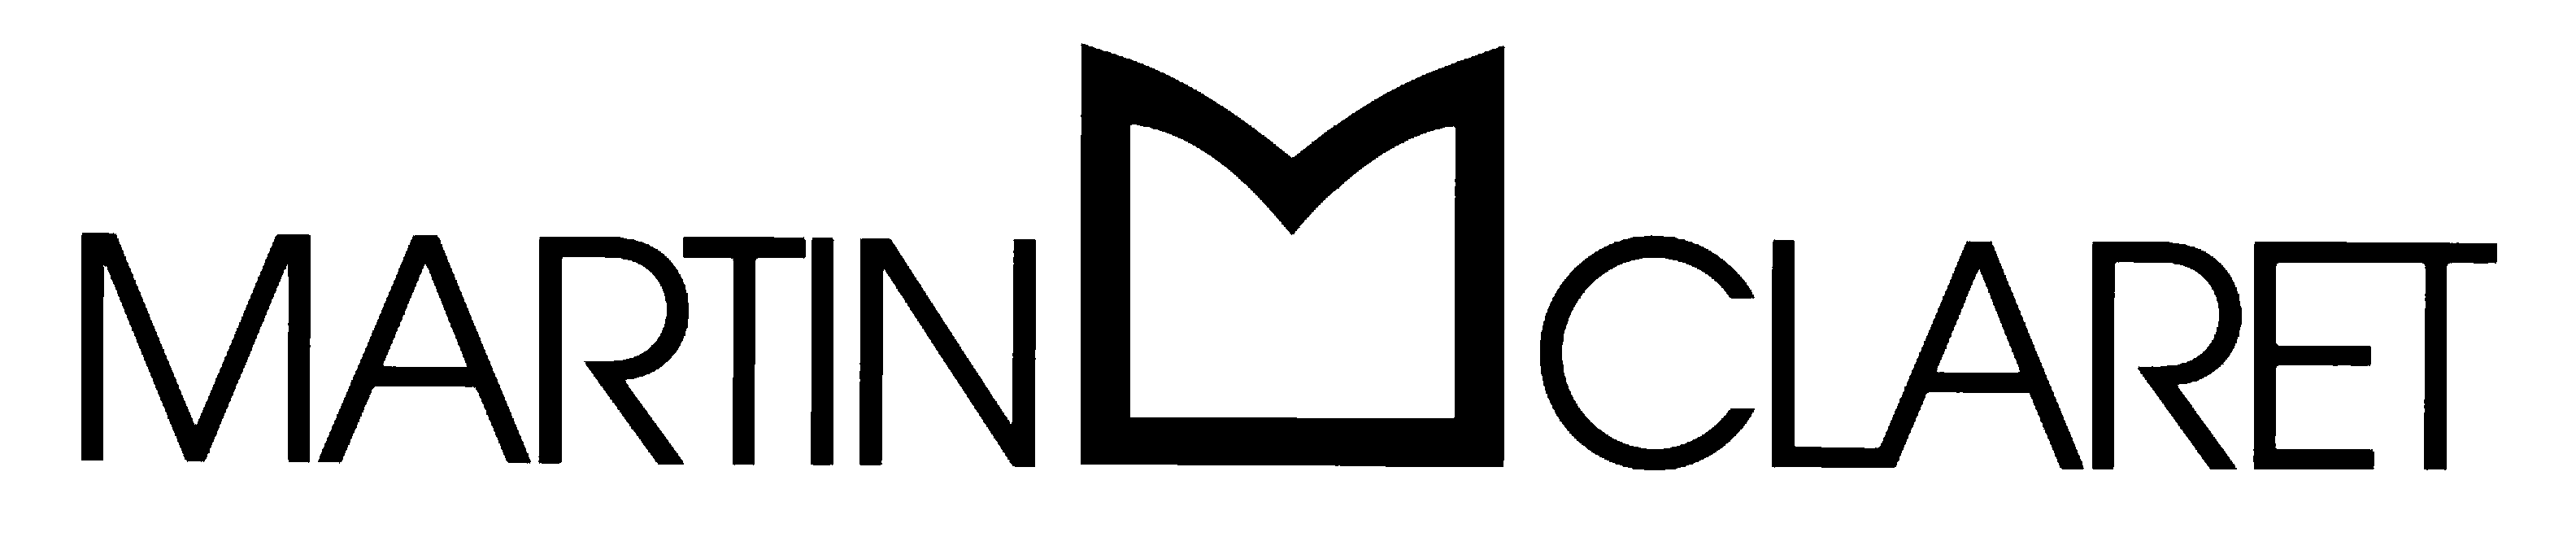 logo Martin Claret